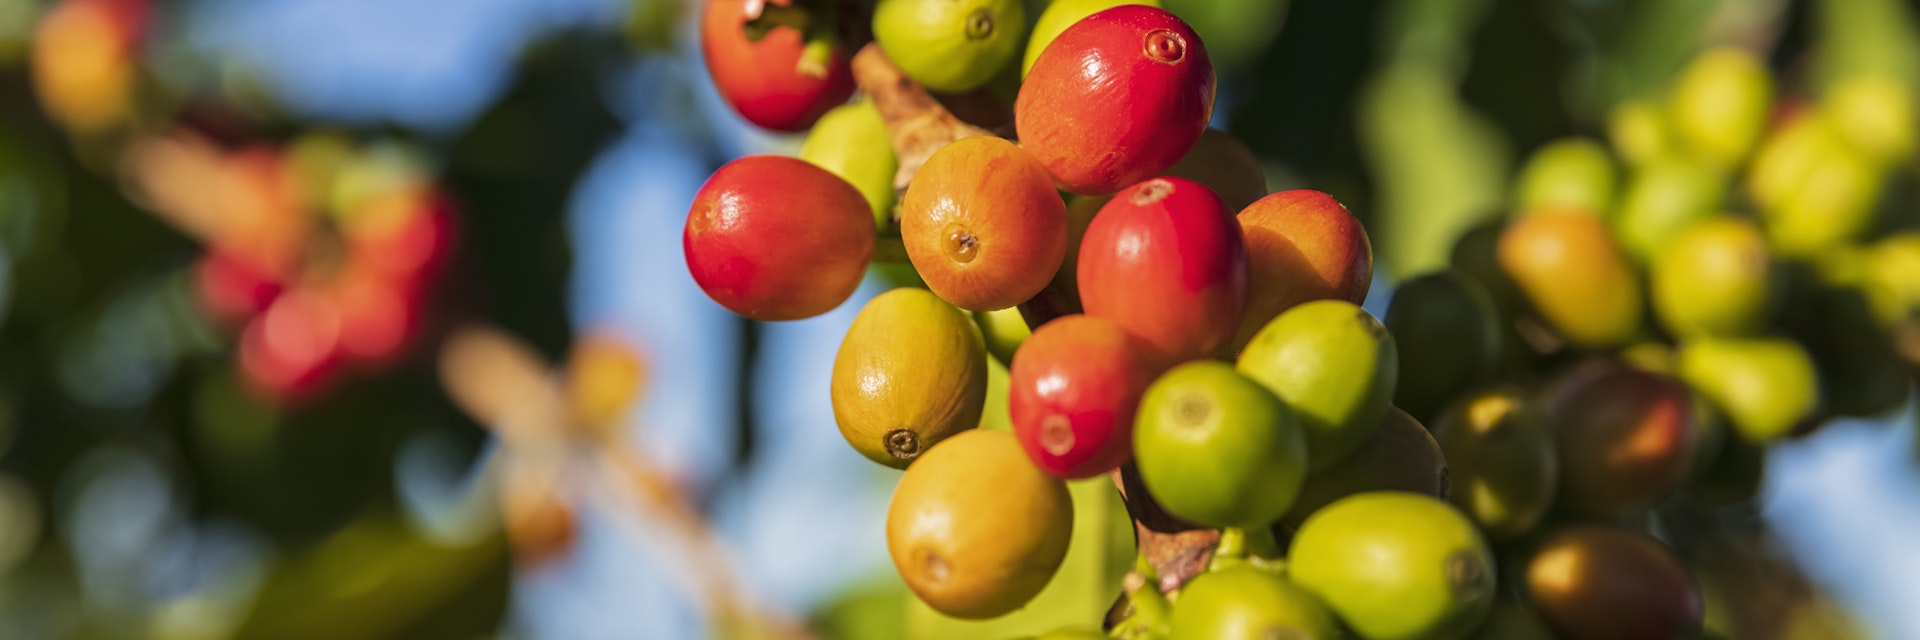 Coffee berries, close-up
1150294125
coffee, coffee bean, coffee plantation, cultivation, green, hawaii